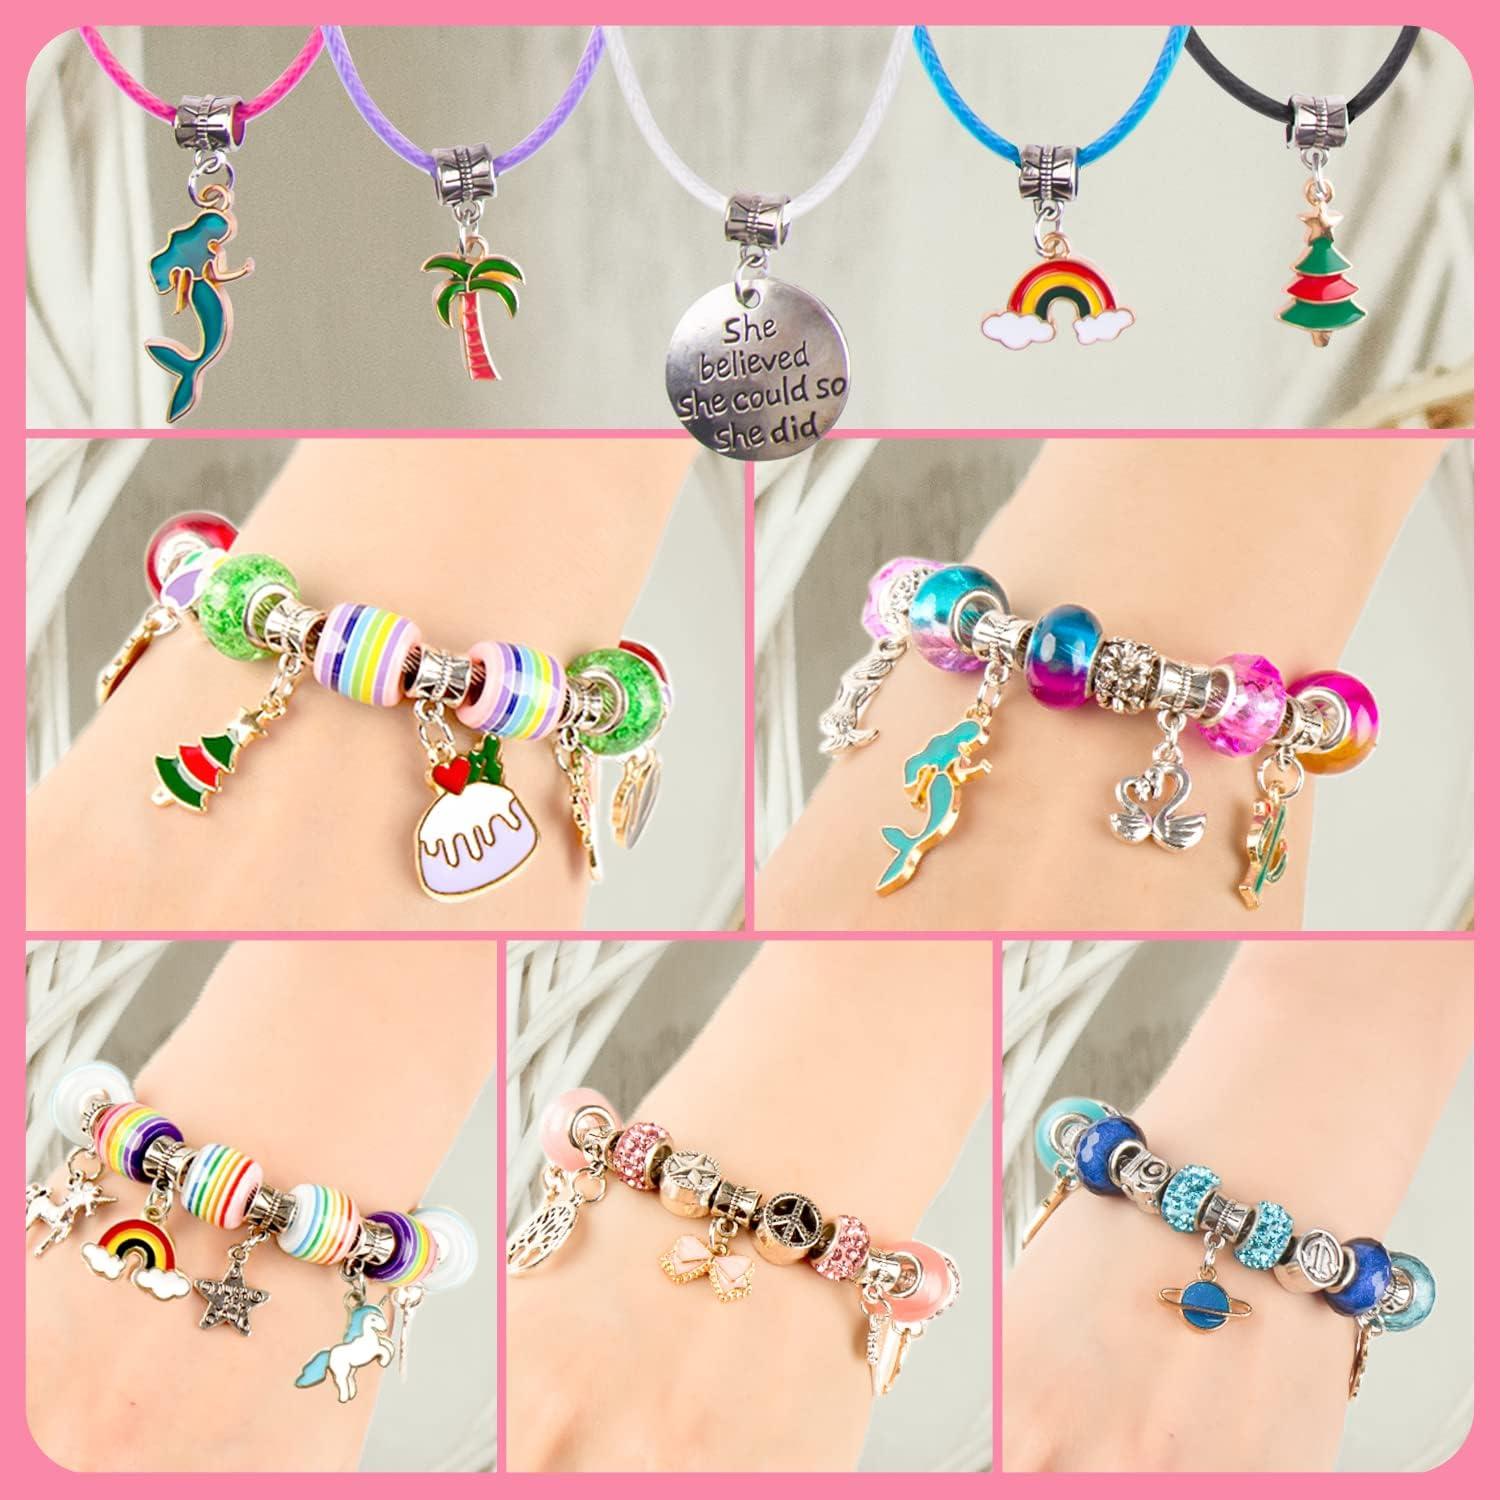 Beads, Unicorn/Mermaid Crafts Gifts Set Jewelry Set Bracelet Making Kit for  Girls Teens Age 8-12 - China Jewelry Set and Homemade Crystal Beads  Bracelet price